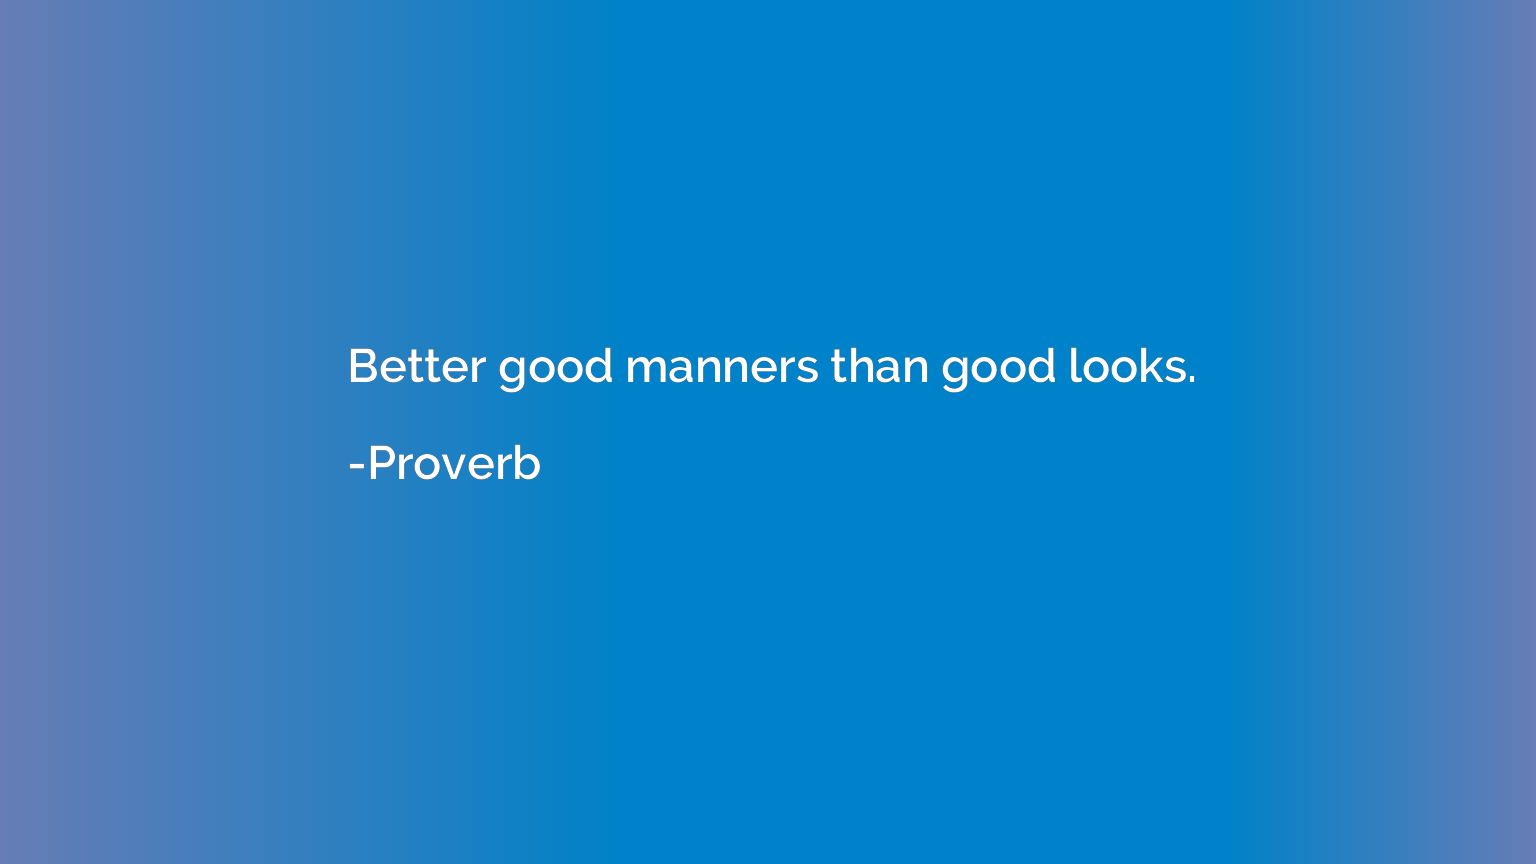 Better good manners than good looks.